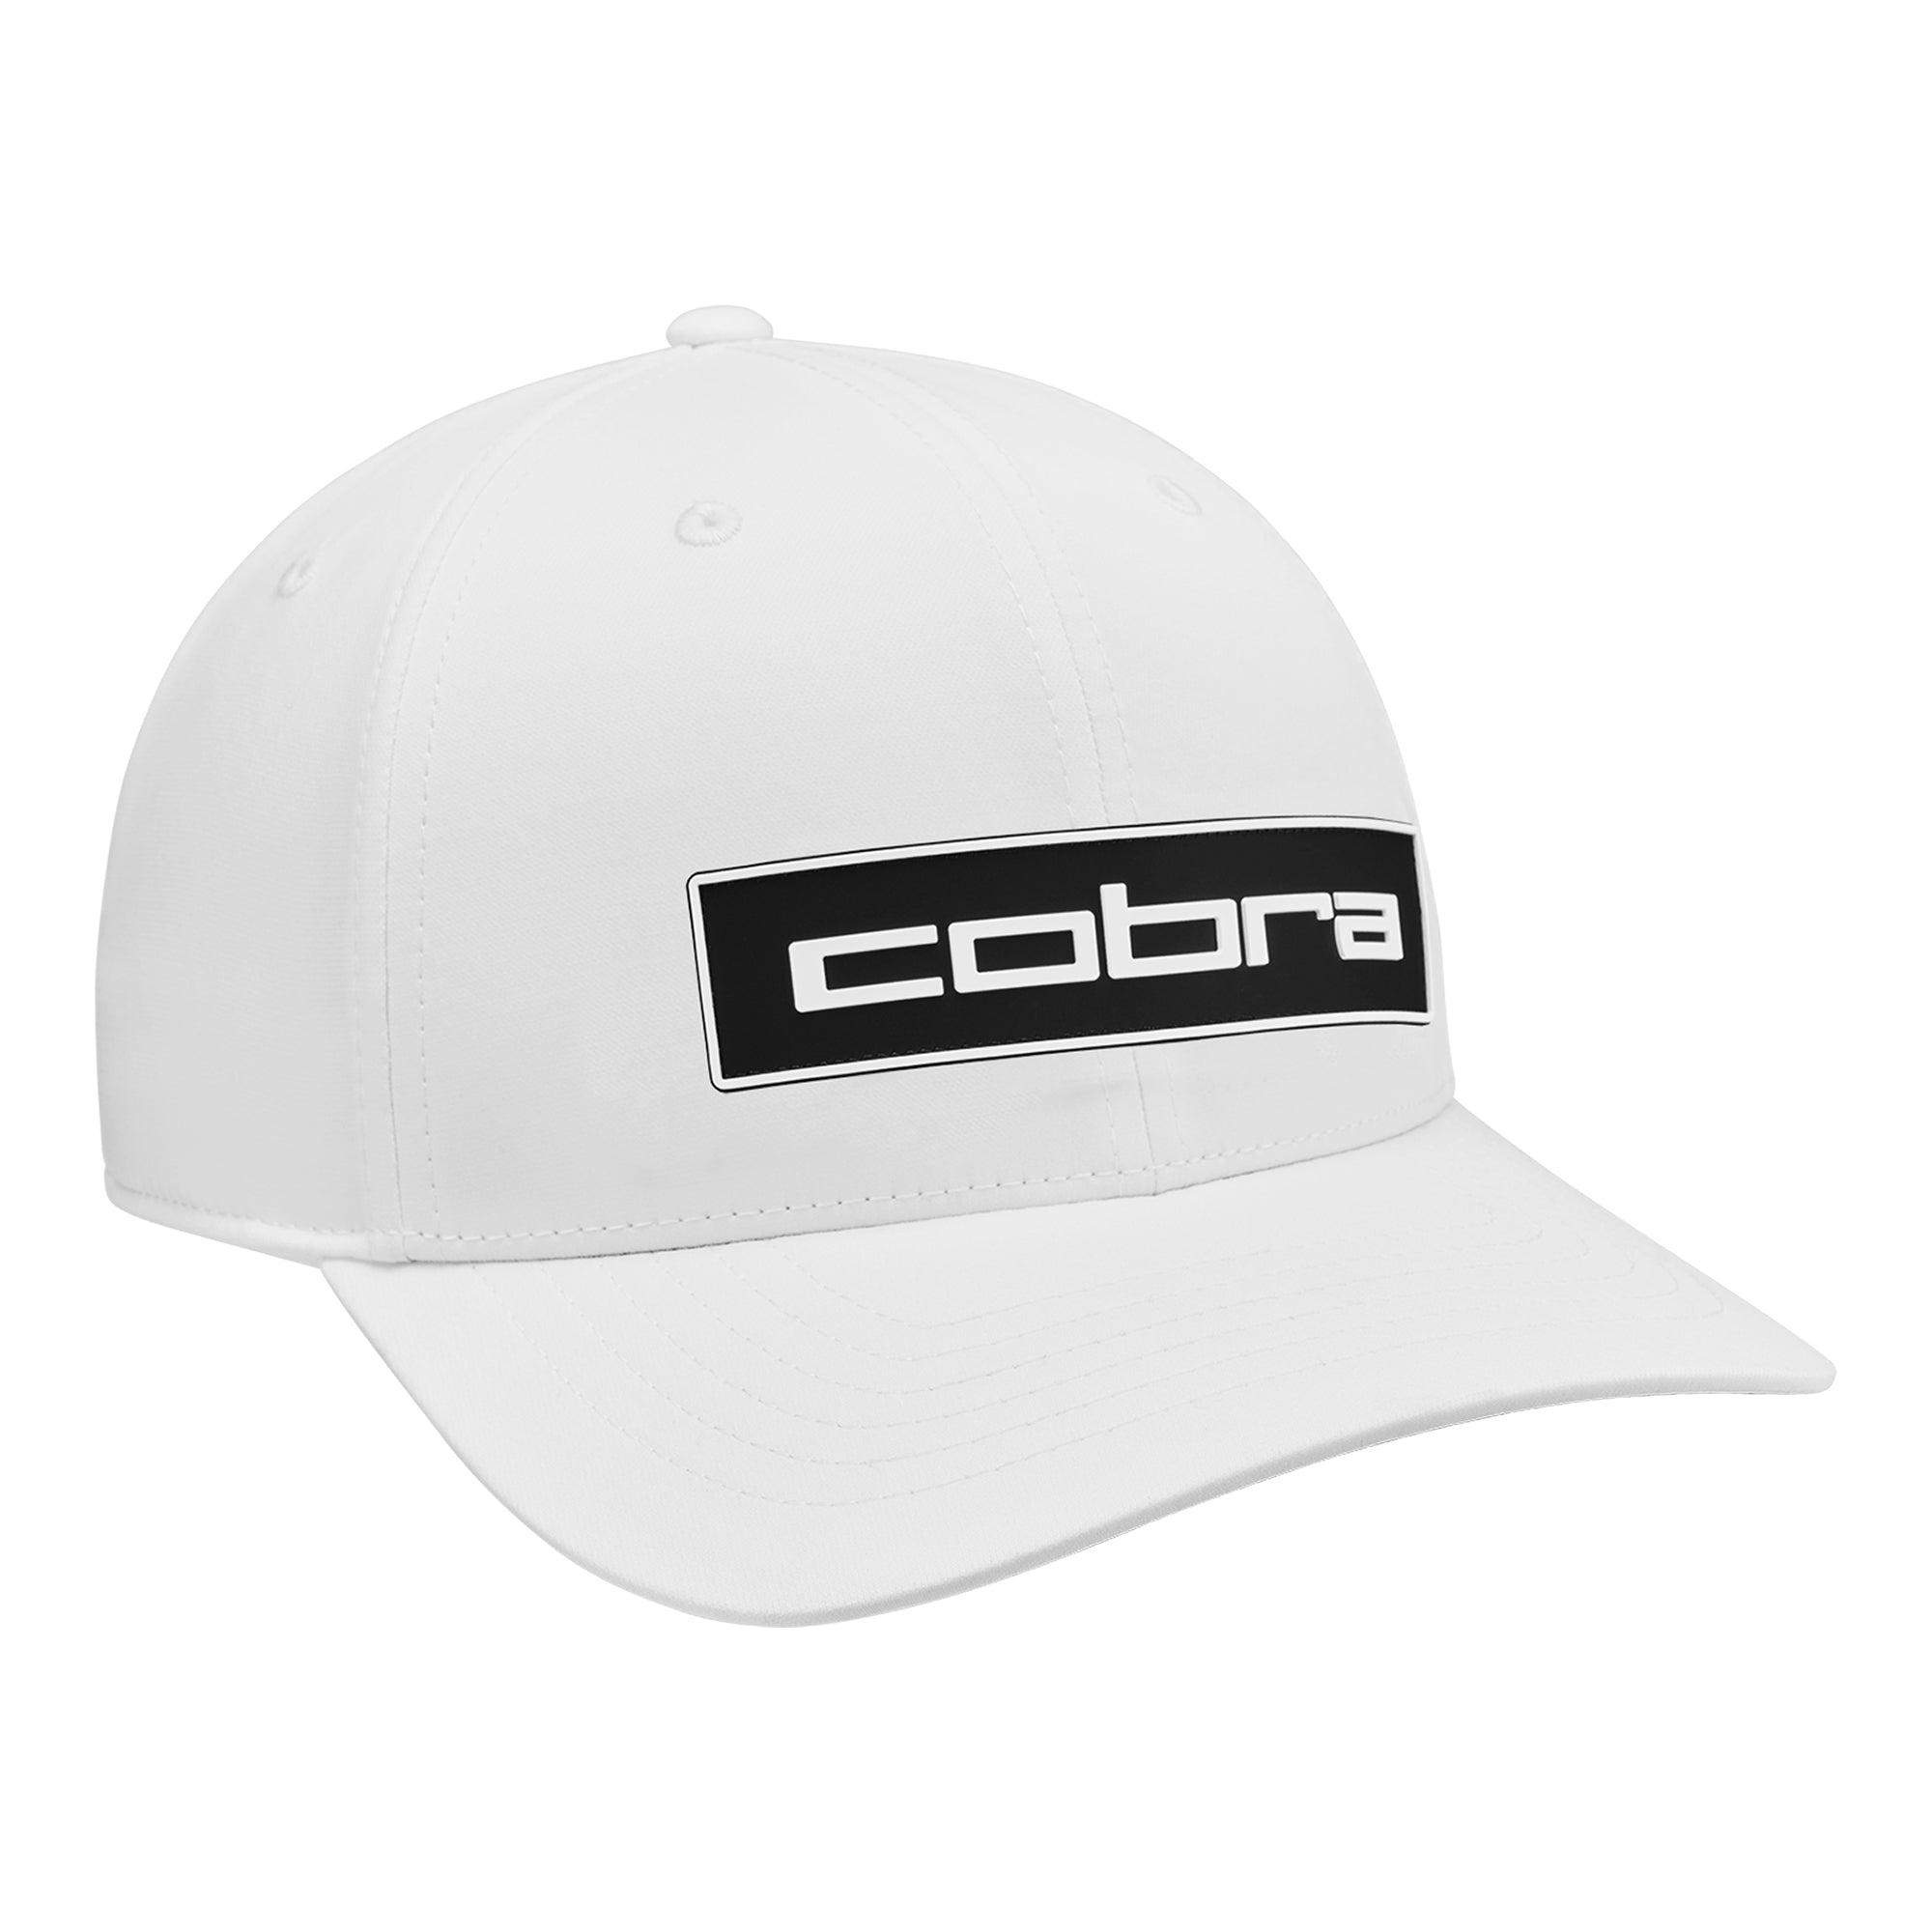 cobra-golf-tour-tech-snapback-cap-909727-white-black-01